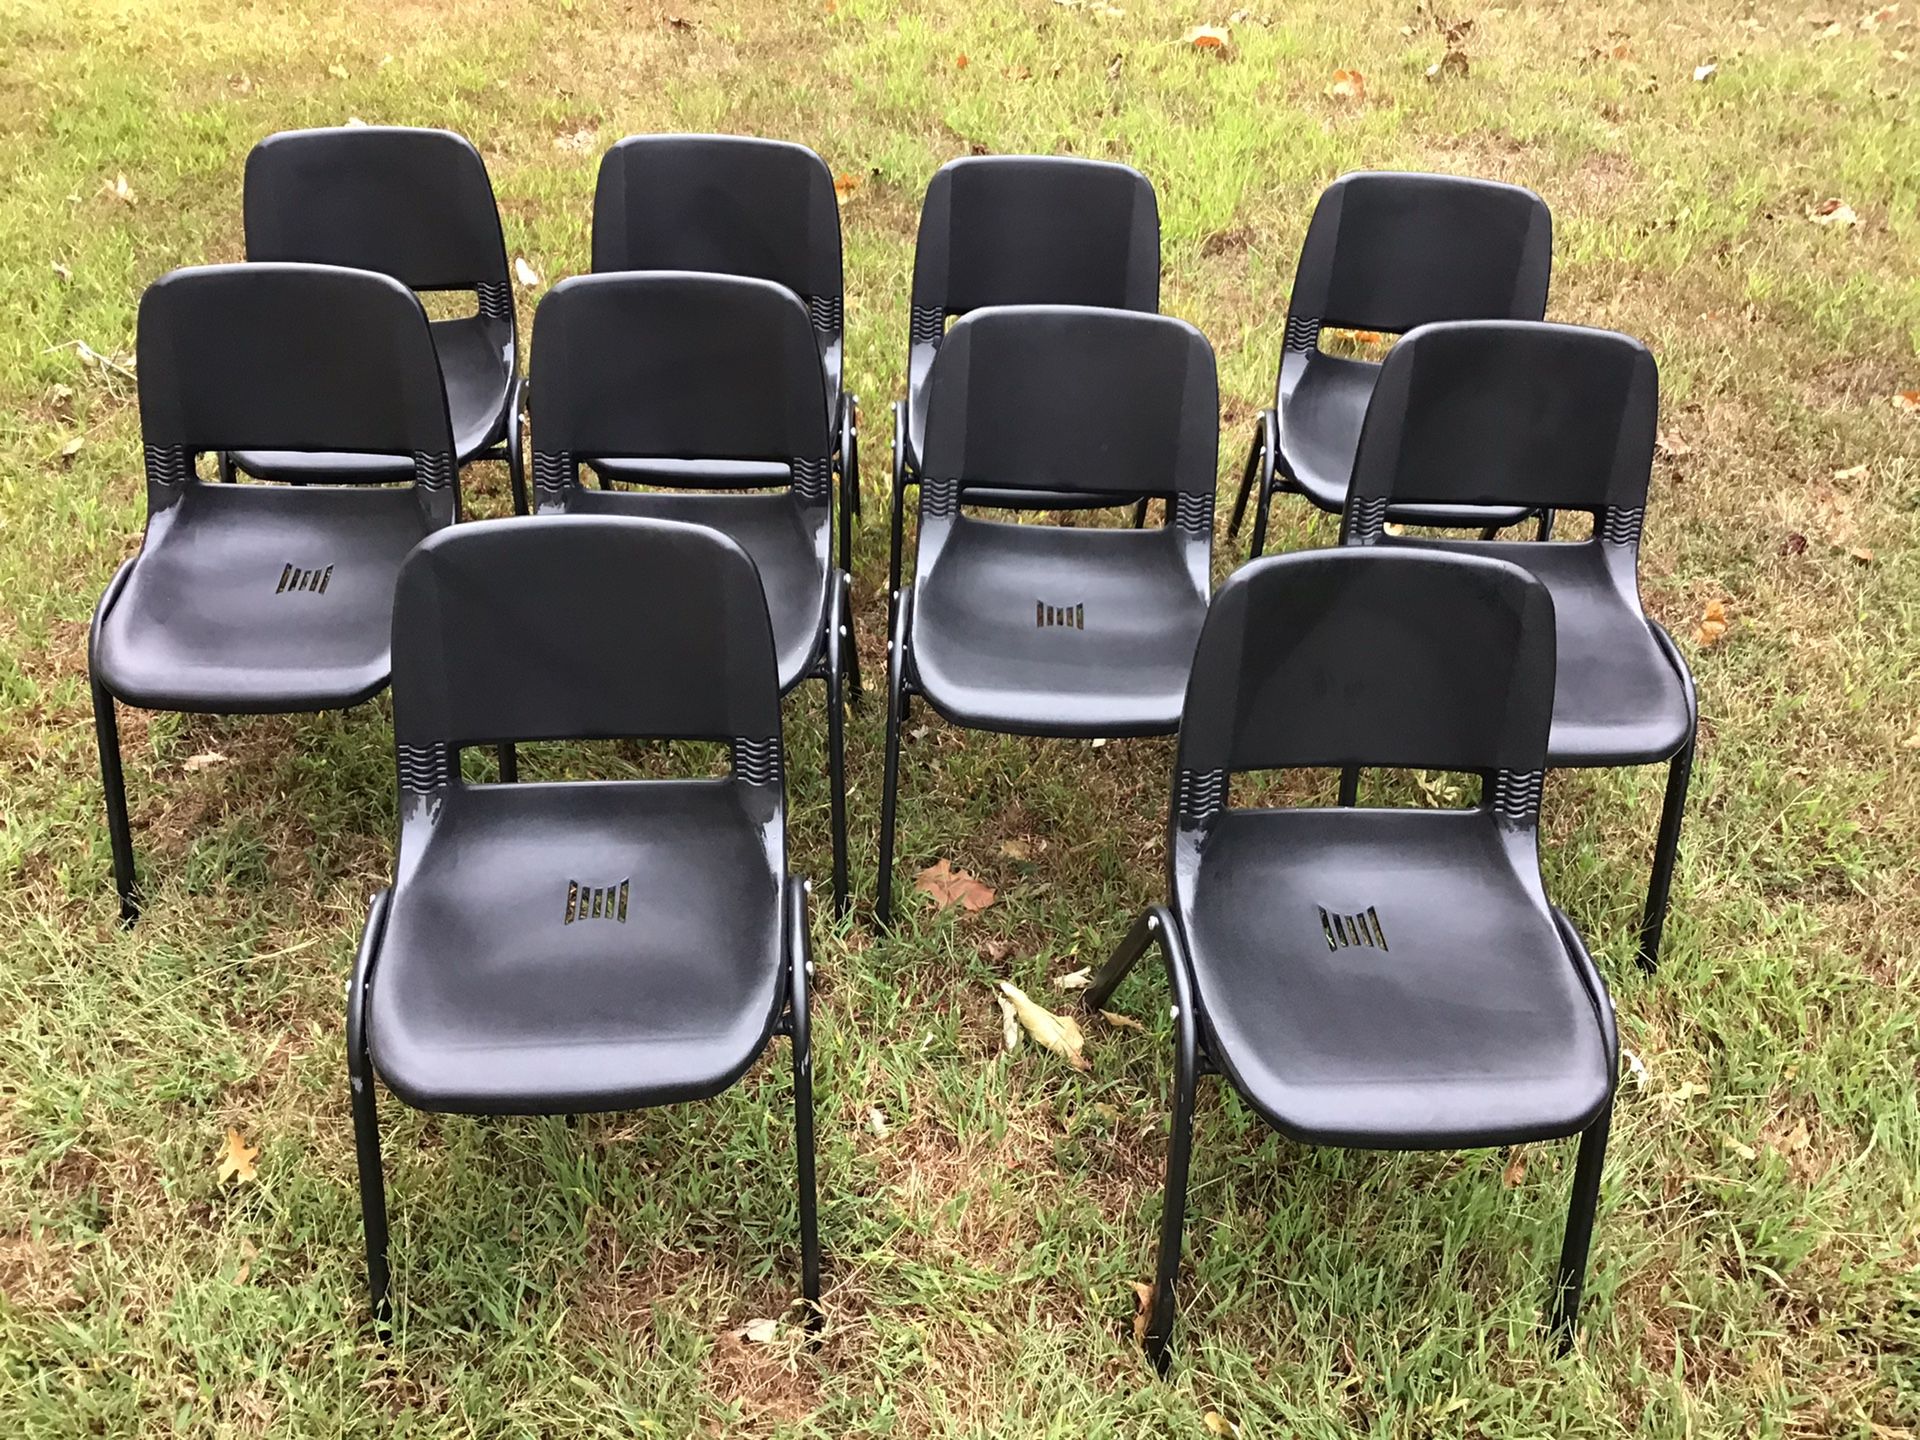 Kids 14” Black Stack Chairs $15ea